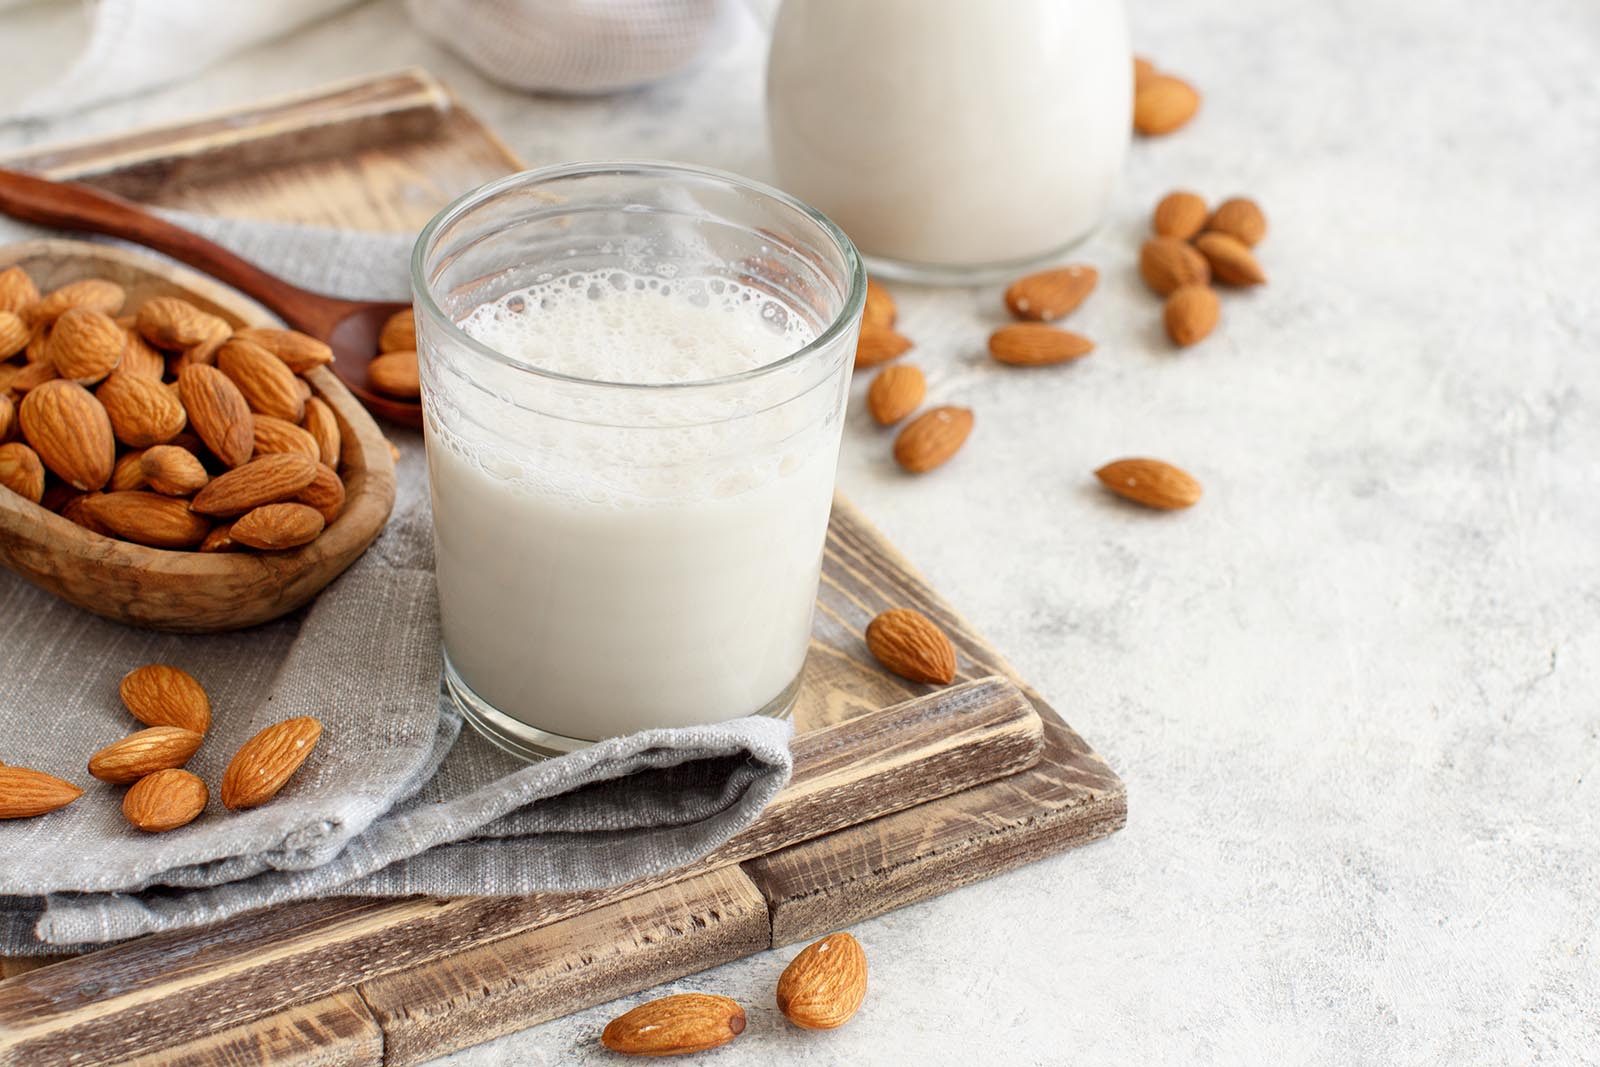 Glass of almondmilk on a tray of almonds